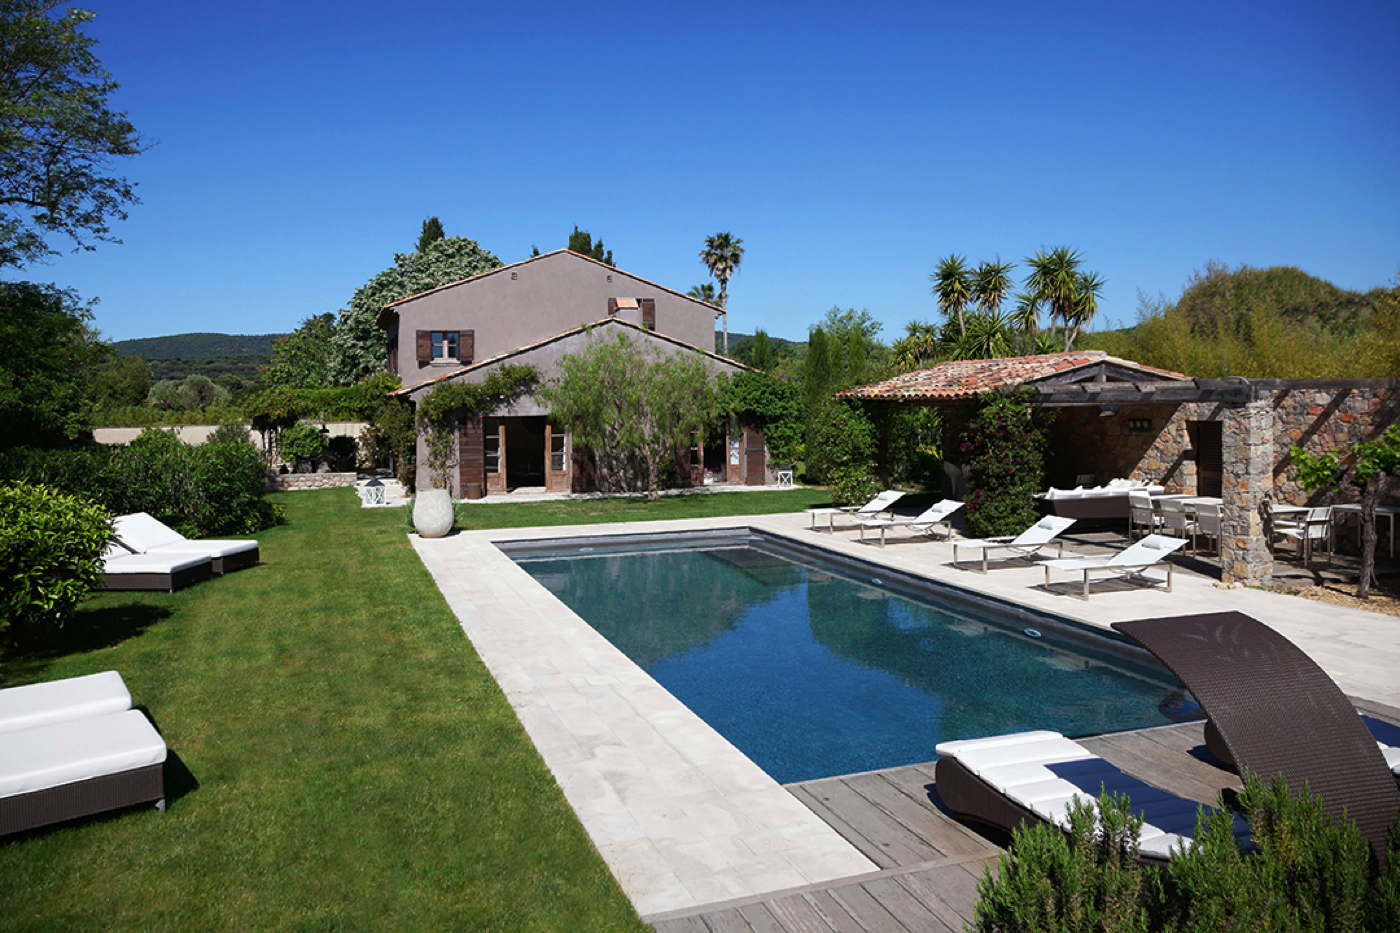 Rental Villa Topaz with Pool Pampelonne Beach, Ramatuelle, Cote d'Azur